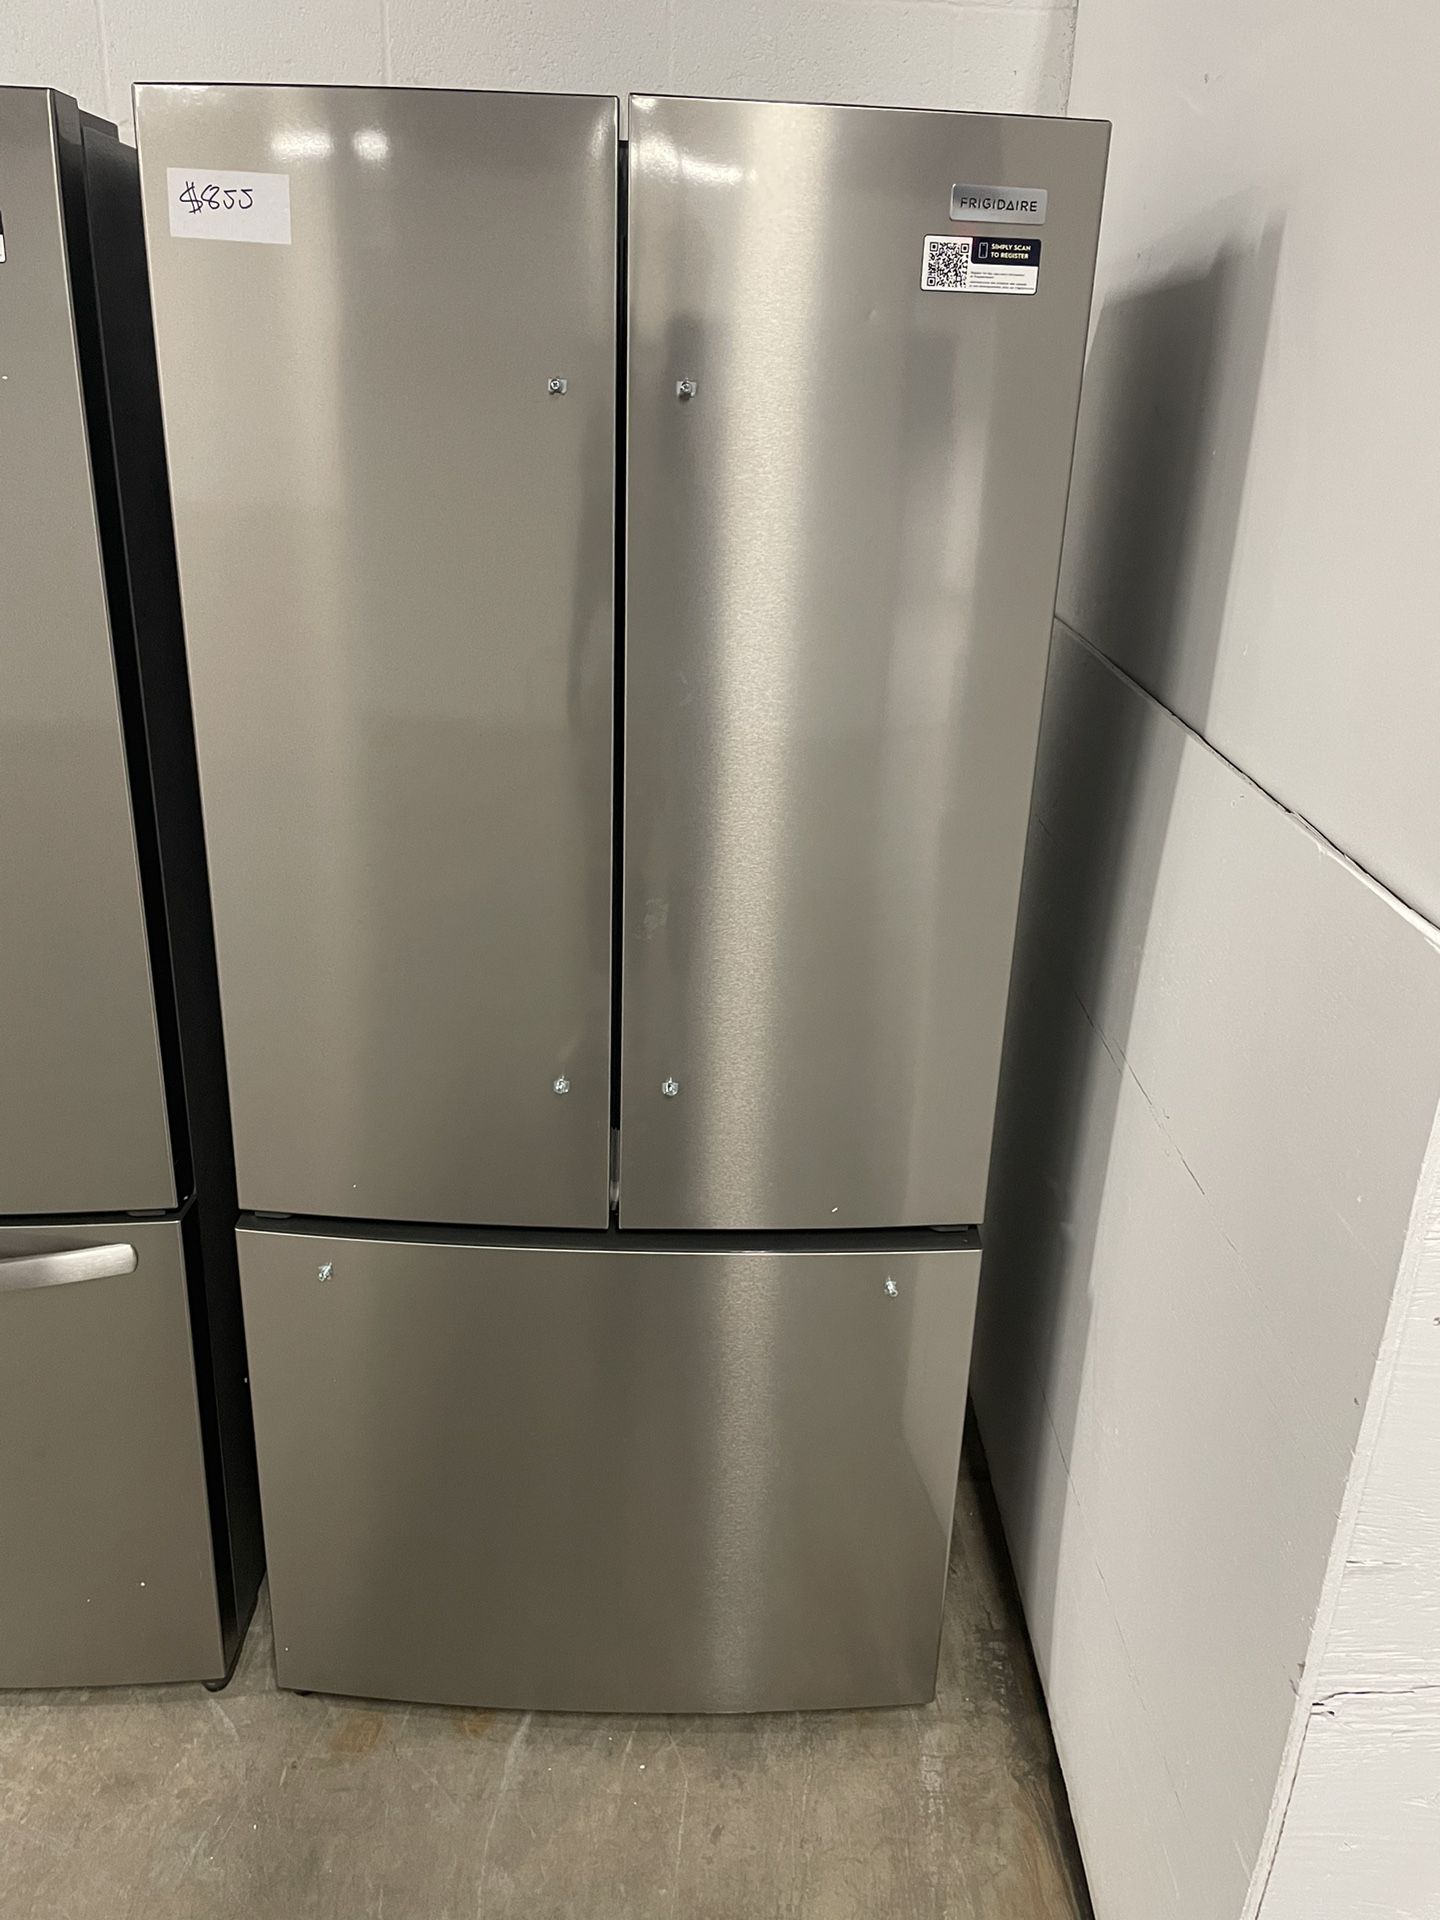 Fridgidaire Refrigerator***Great Deal***